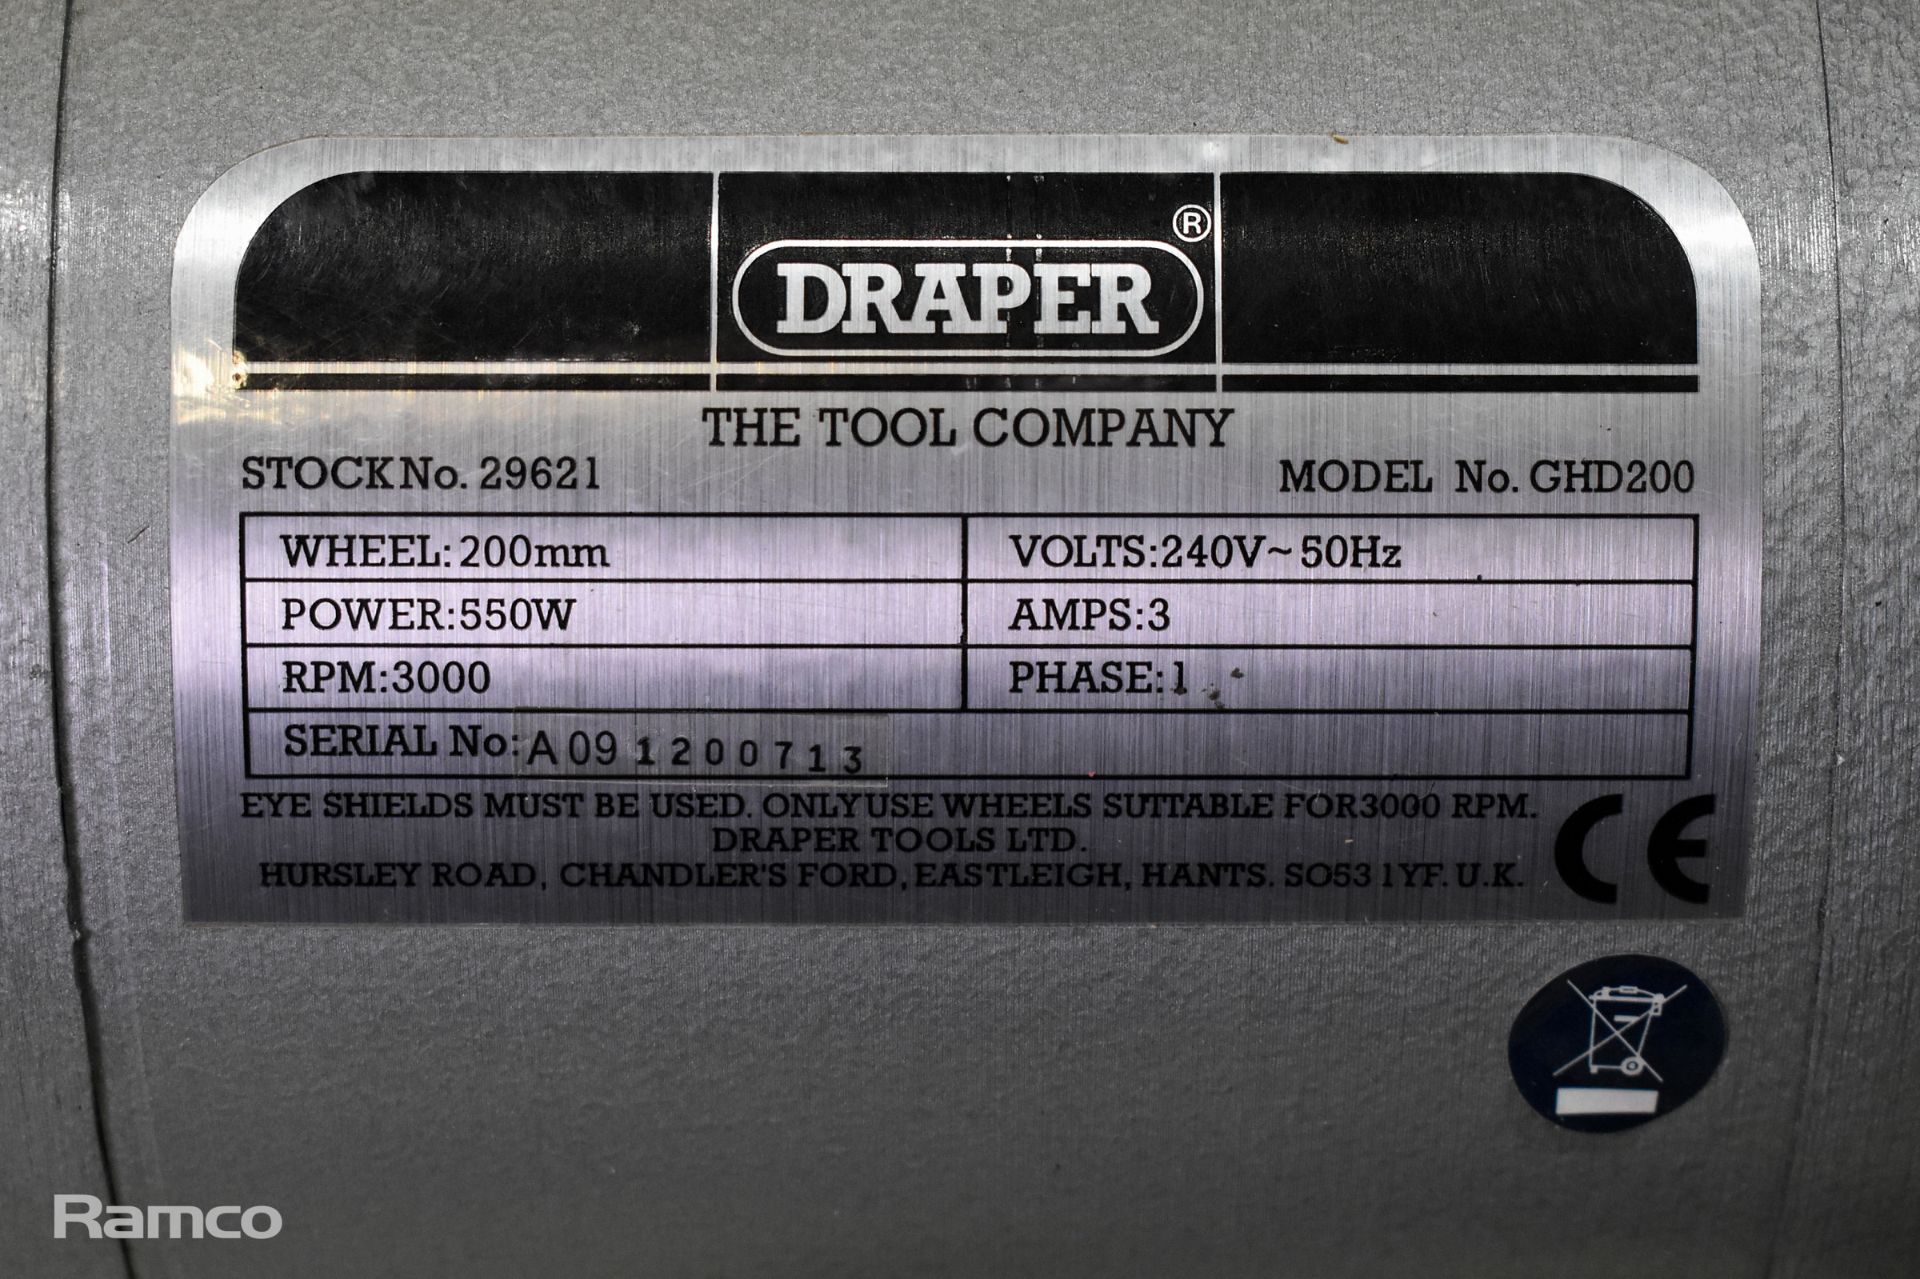 Draper GHD200 - 200mm heavy duty bench grinder - 240V - Image 4 of 8